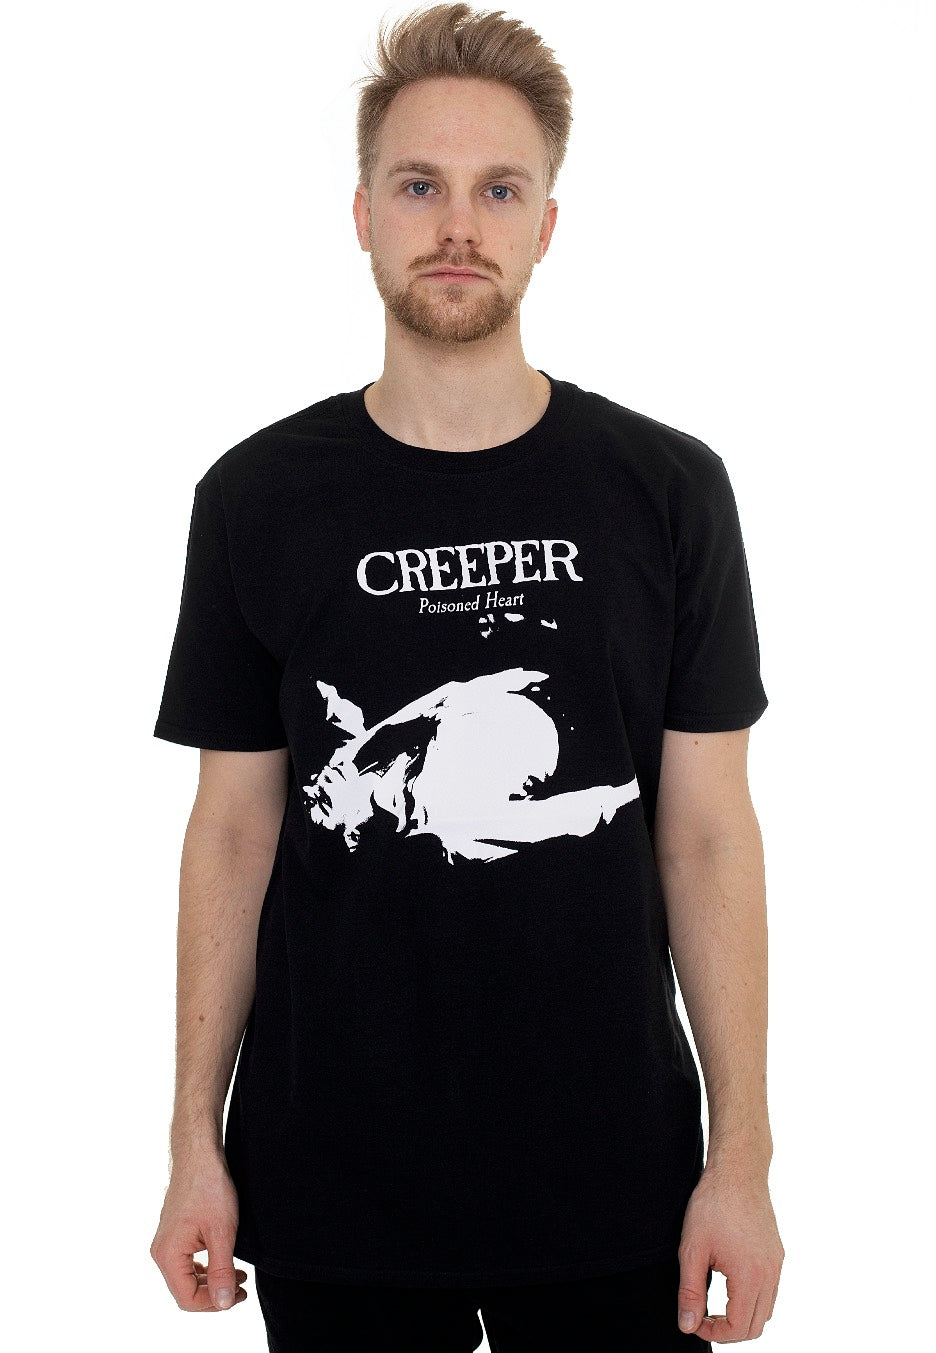 Creeper - Poisoned Heart - T-Shirt